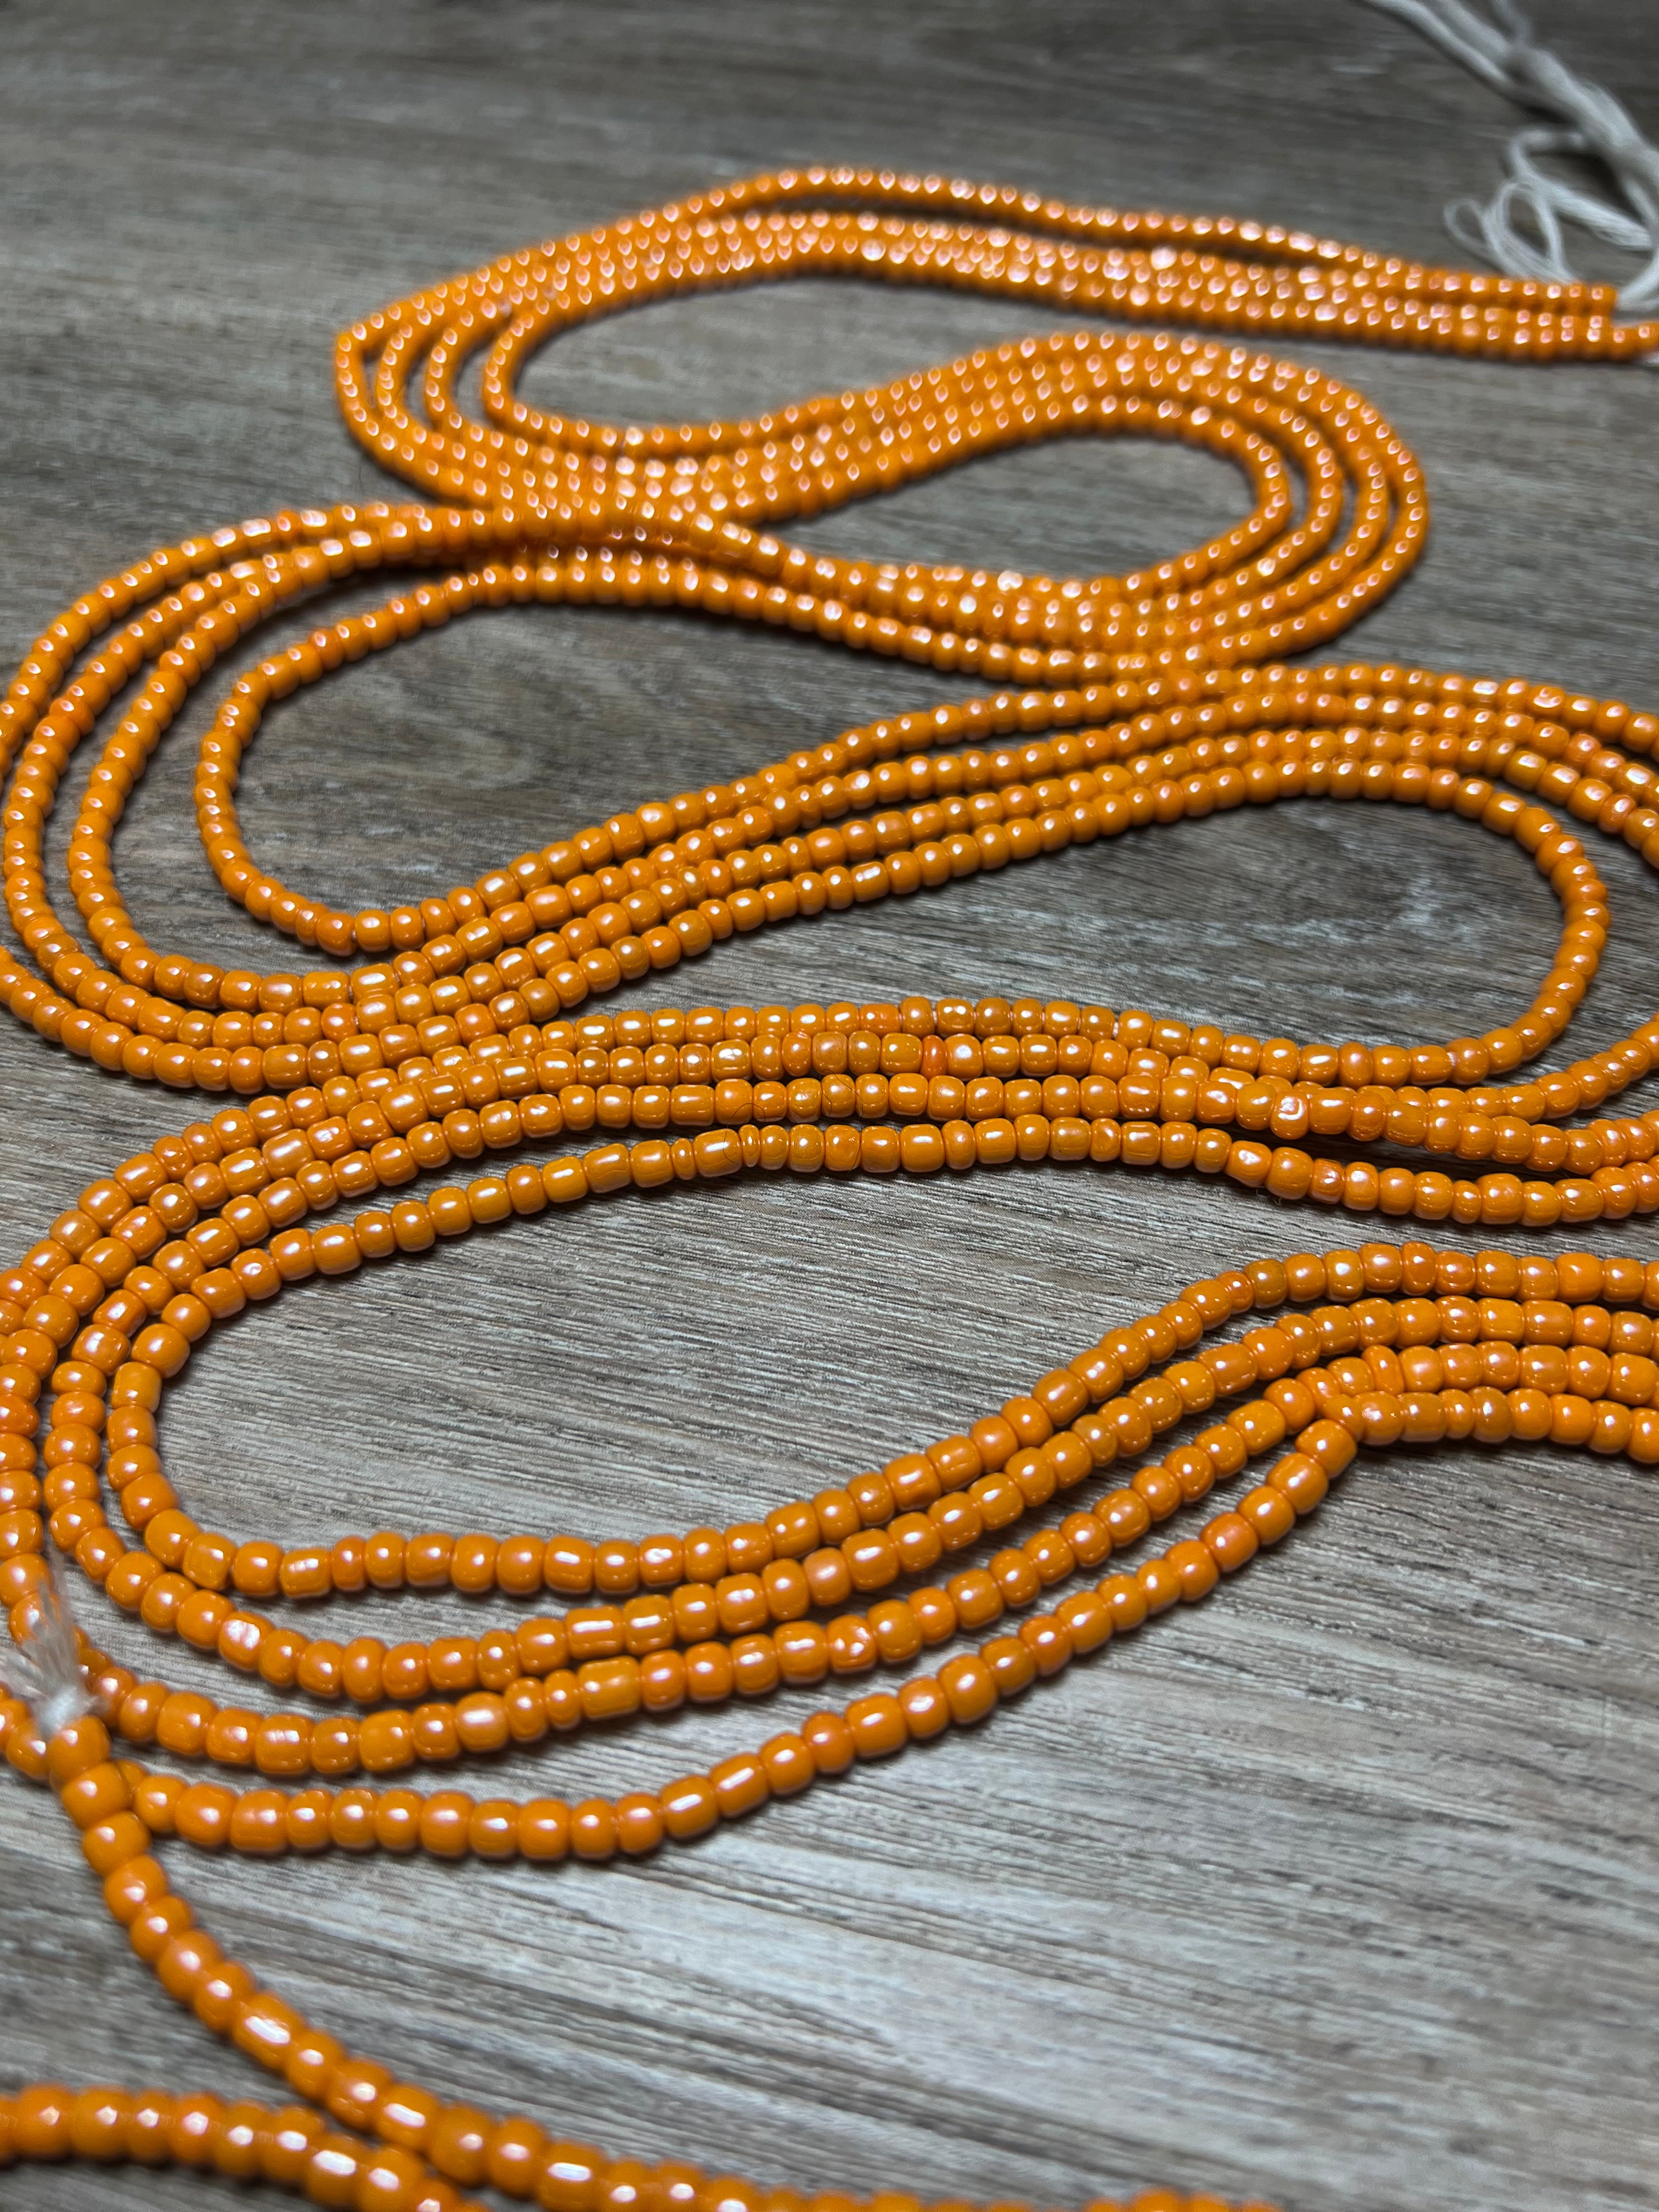 Orange Waist Beads